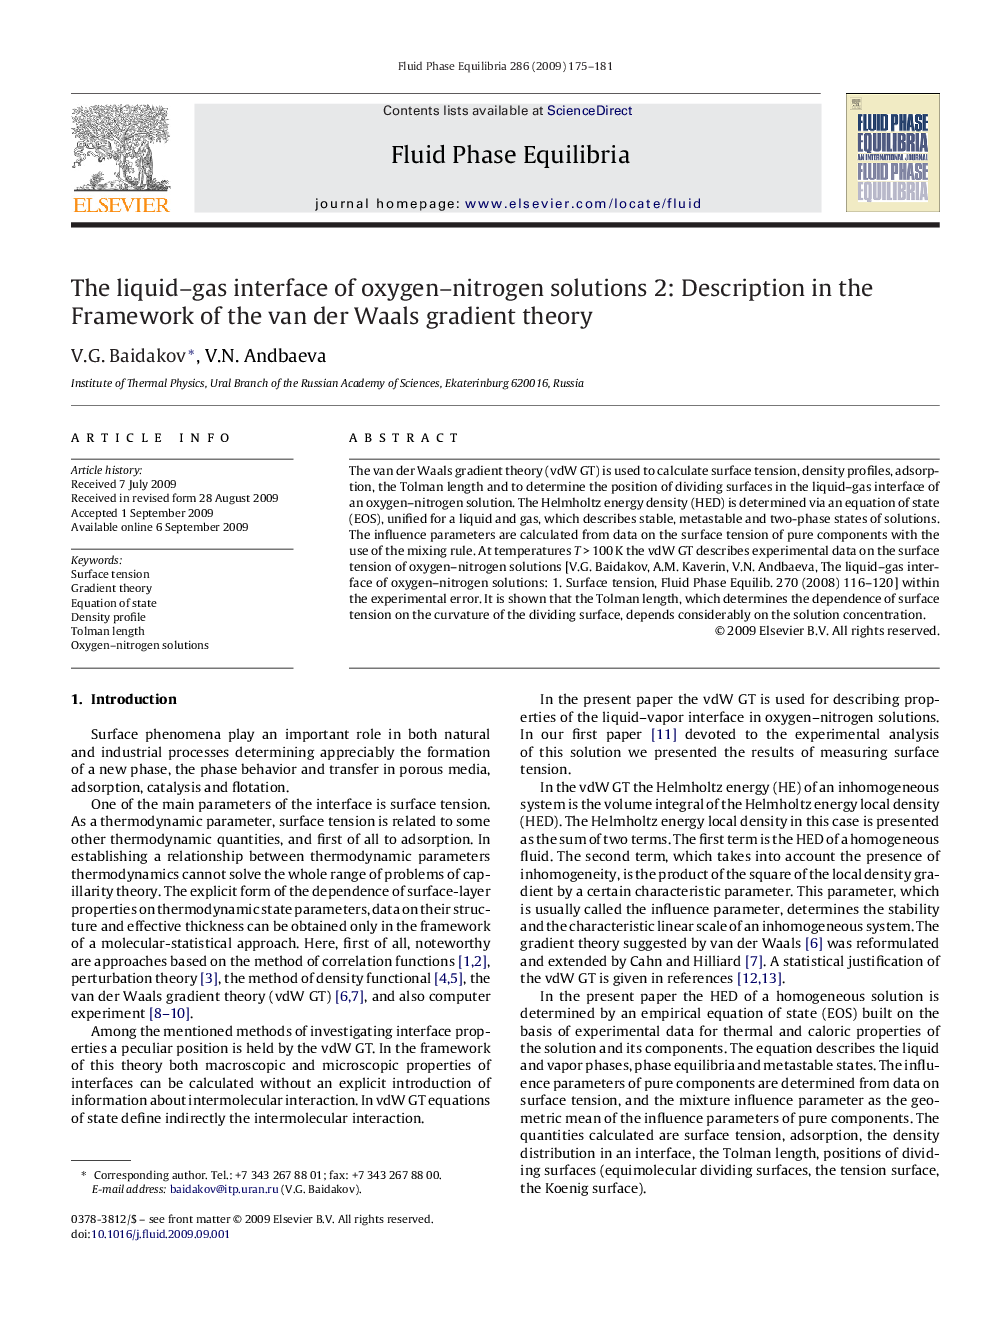 The liquid–gas interface of oxygen–nitrogen solutions 2: Description in the Framework of the van der Waals gradient theory